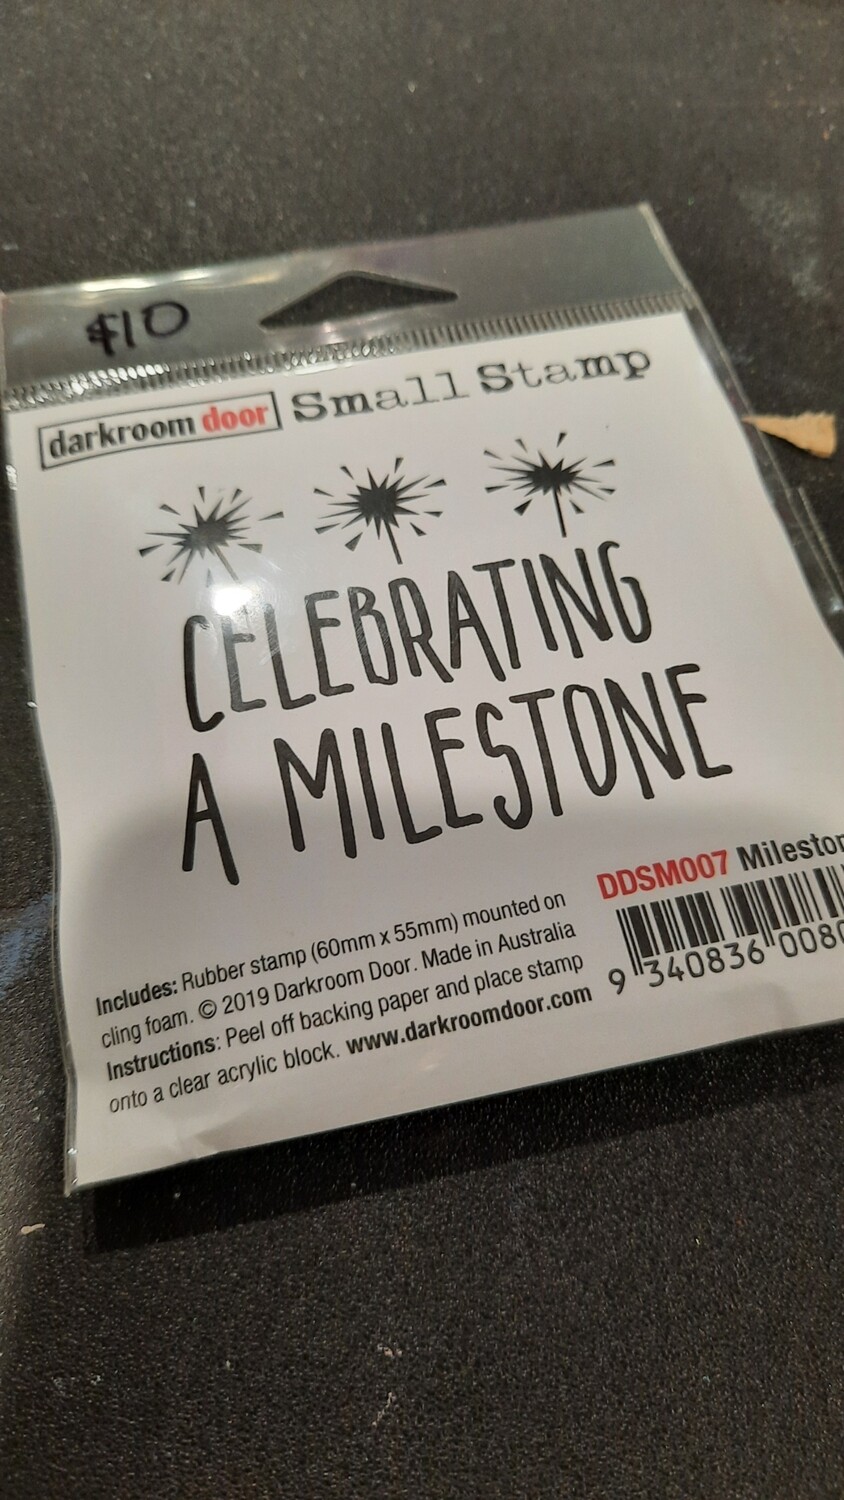 Celebrating a milestone stamp